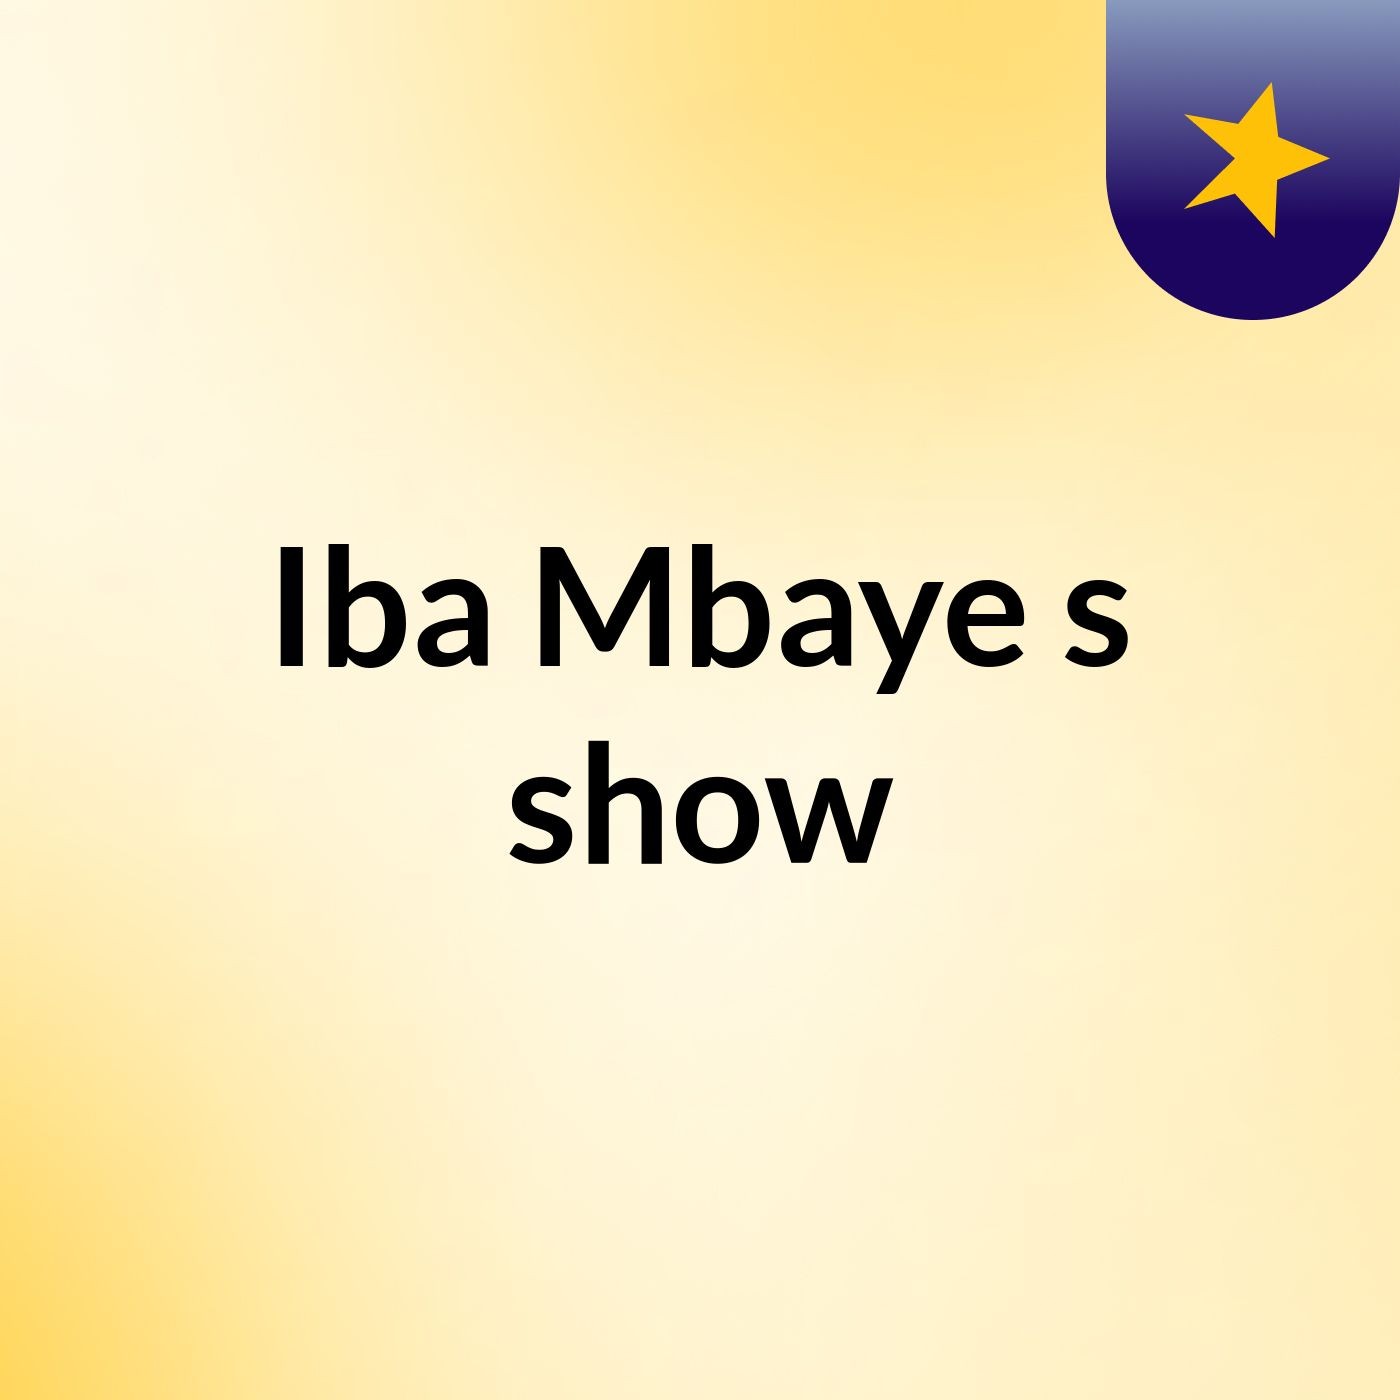 Iba Mbaye's show